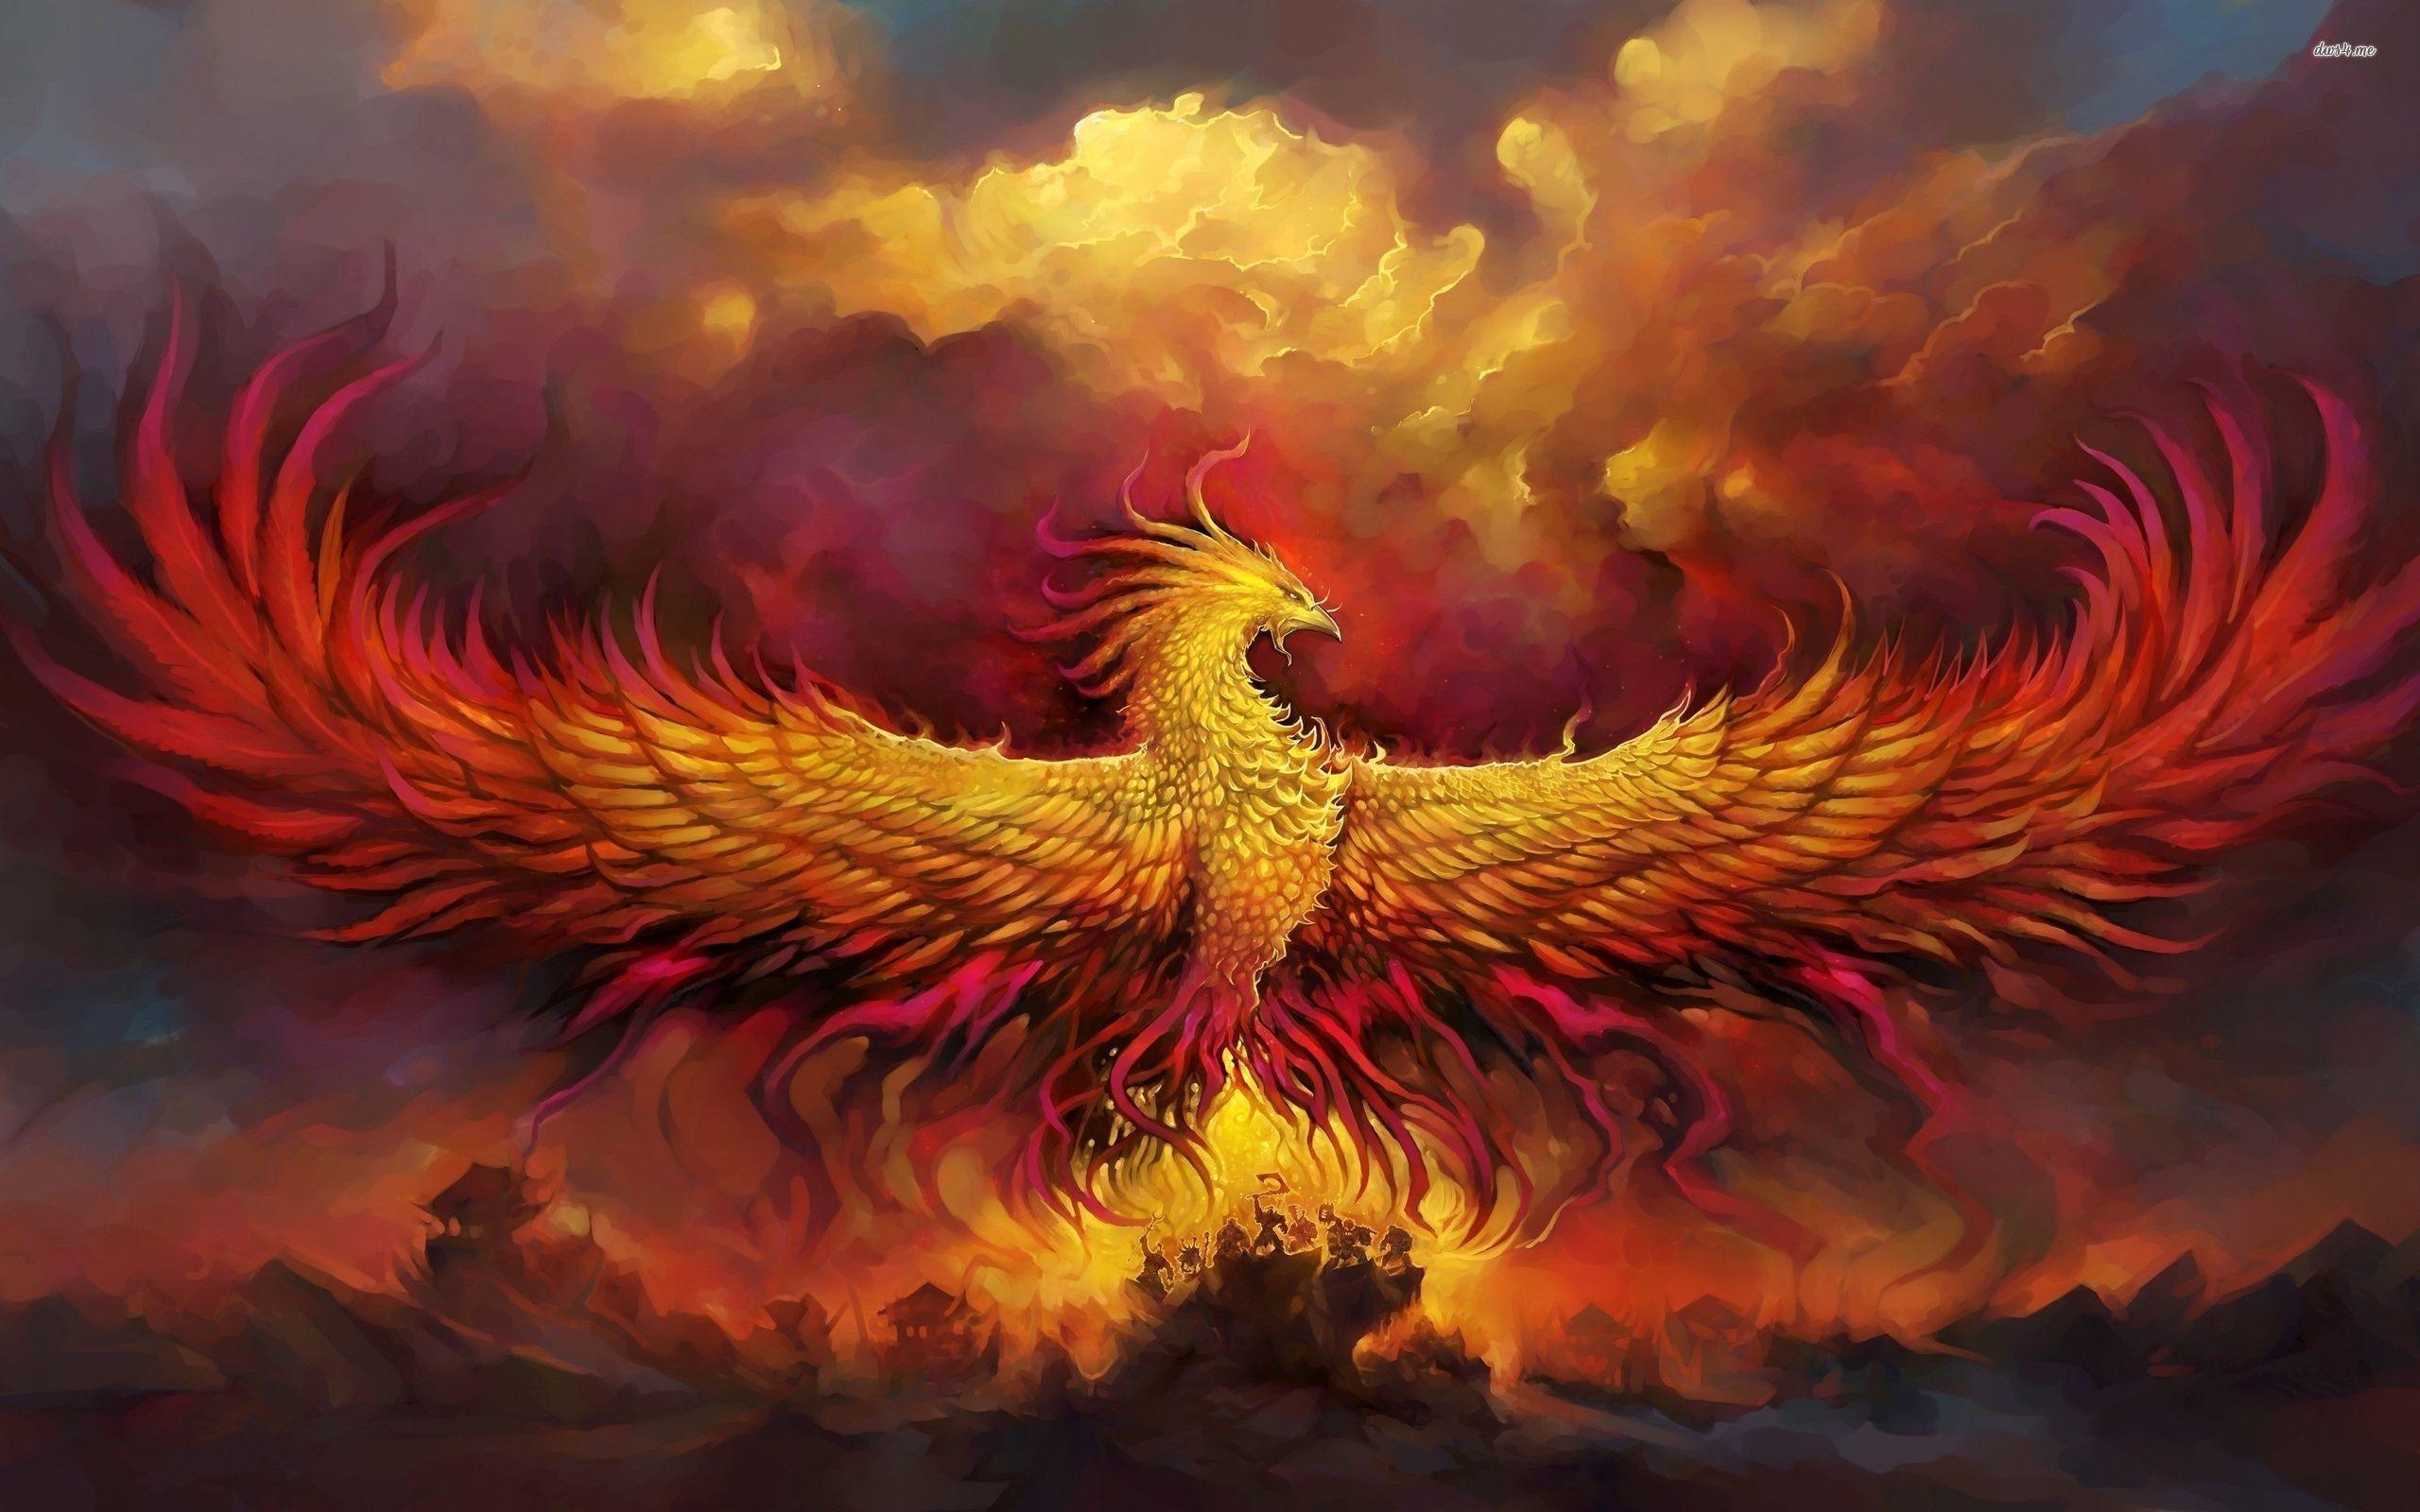 Pictures of phoenix rising